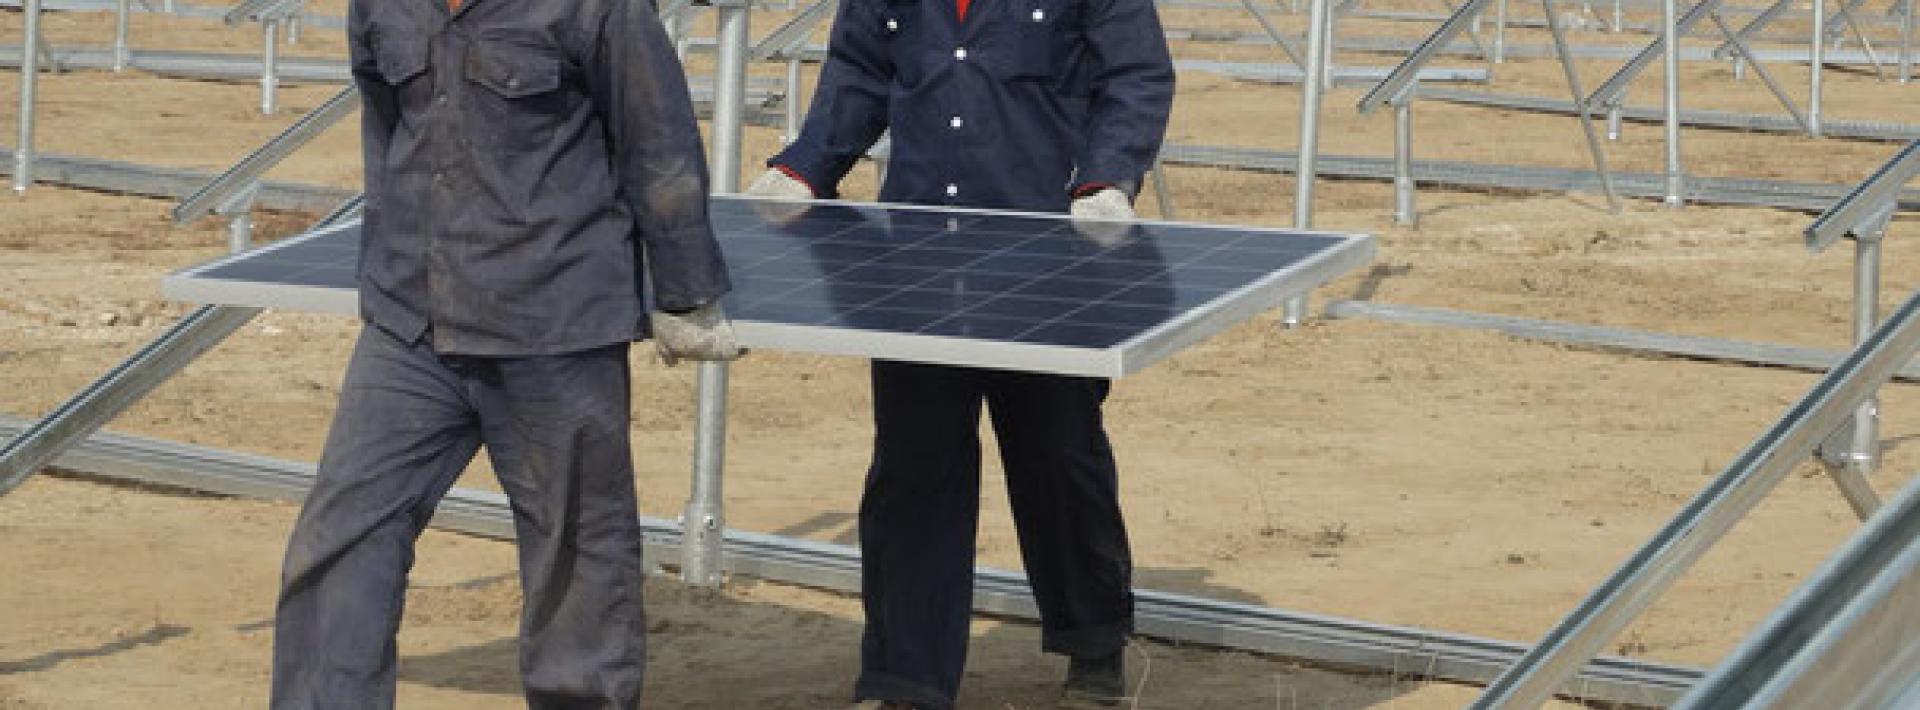 China helps Pakistan build world’s largest solar farm